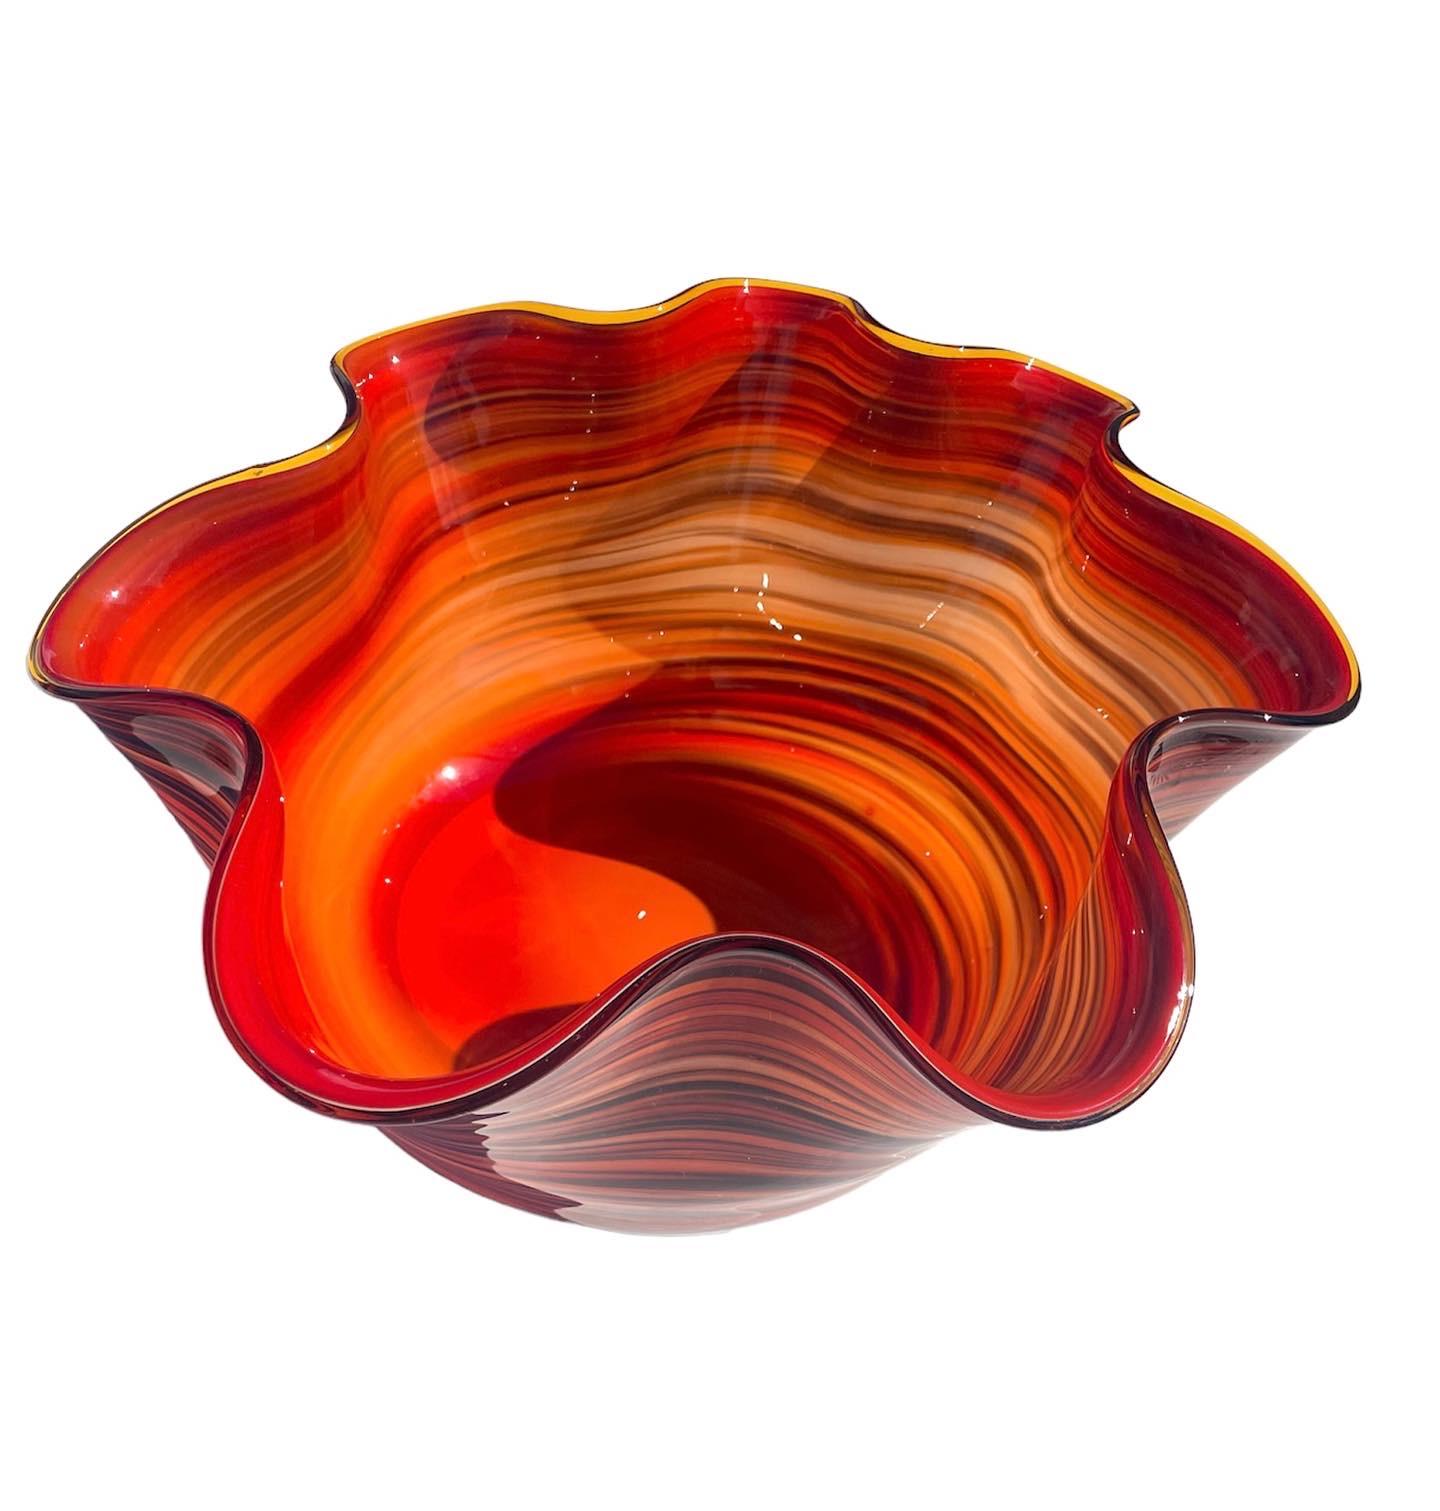 Vibrant  Blown Glass Handkerchief Bowl, Attributed to Murano 1